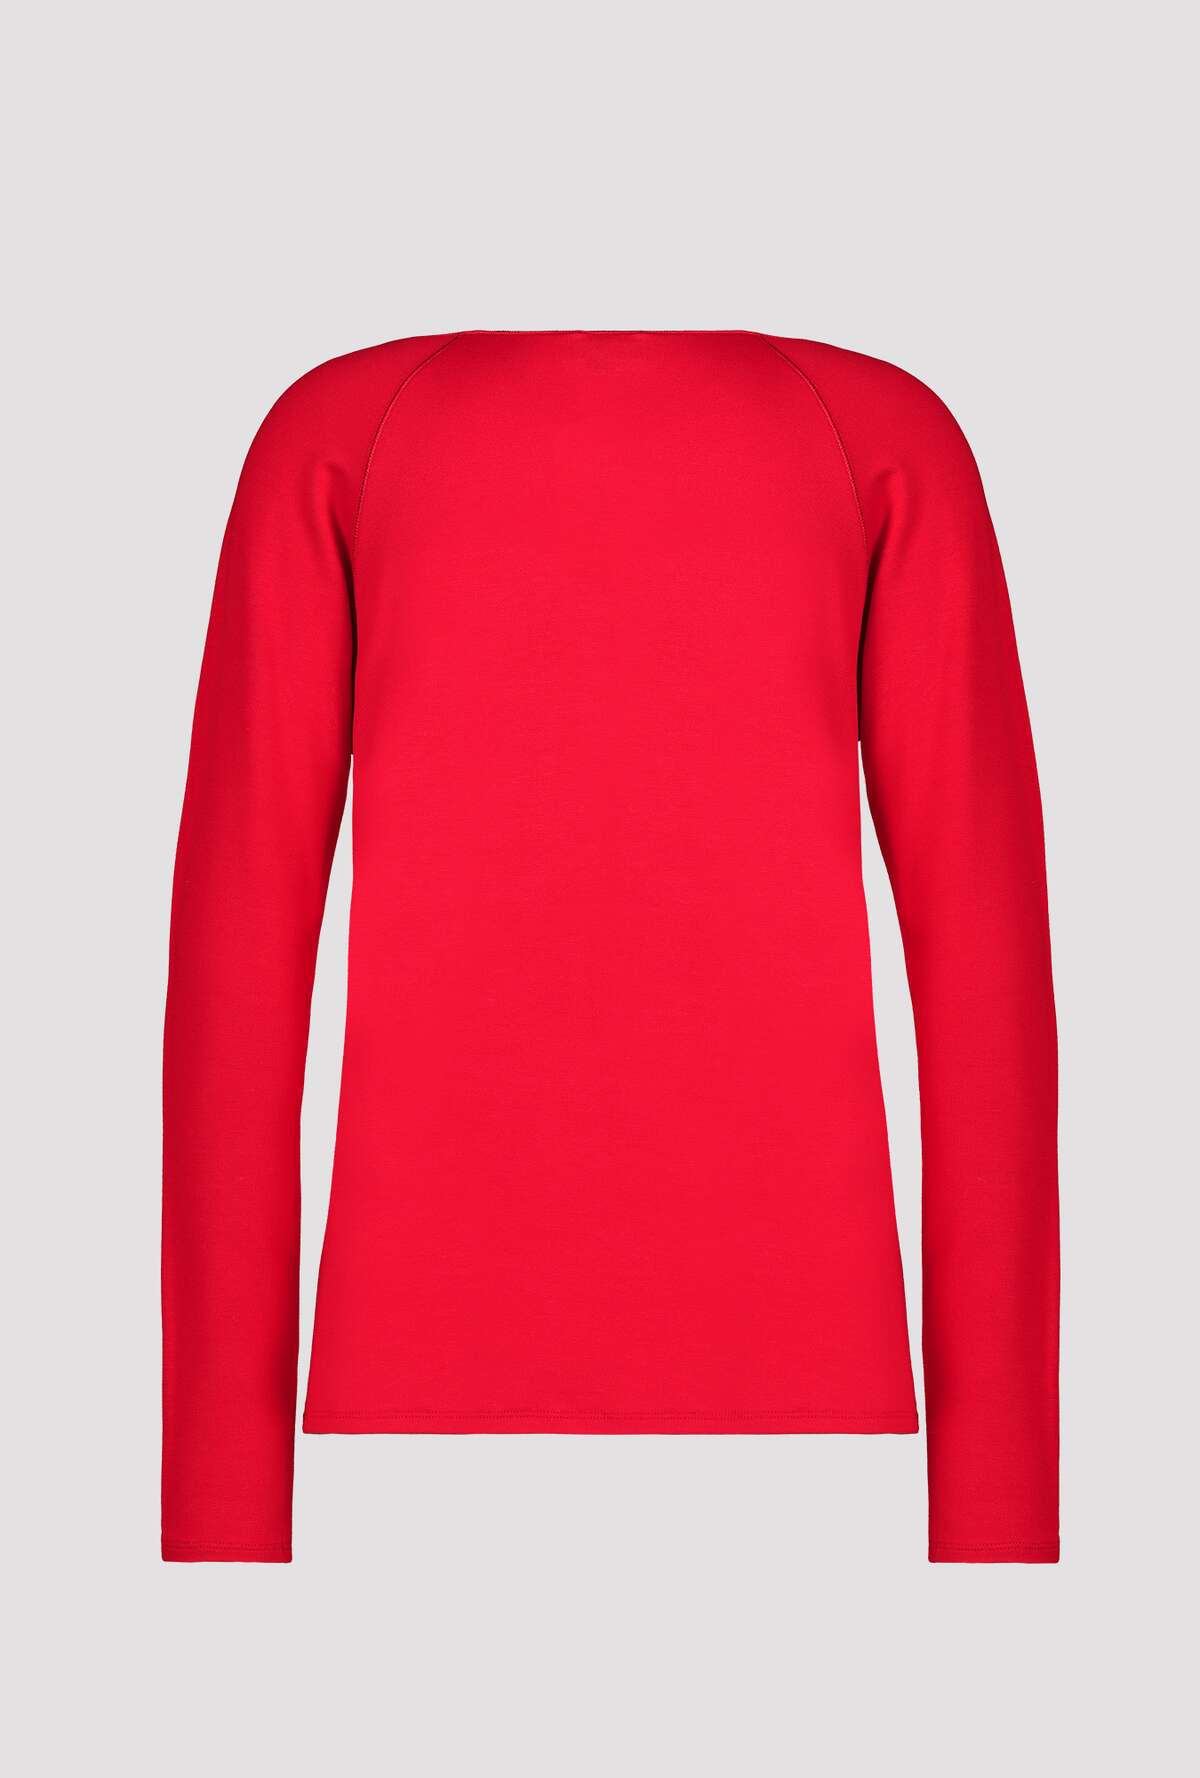 Monari Unifarbenes Langarm Shirt | Jersey weber Rundhals mode mit